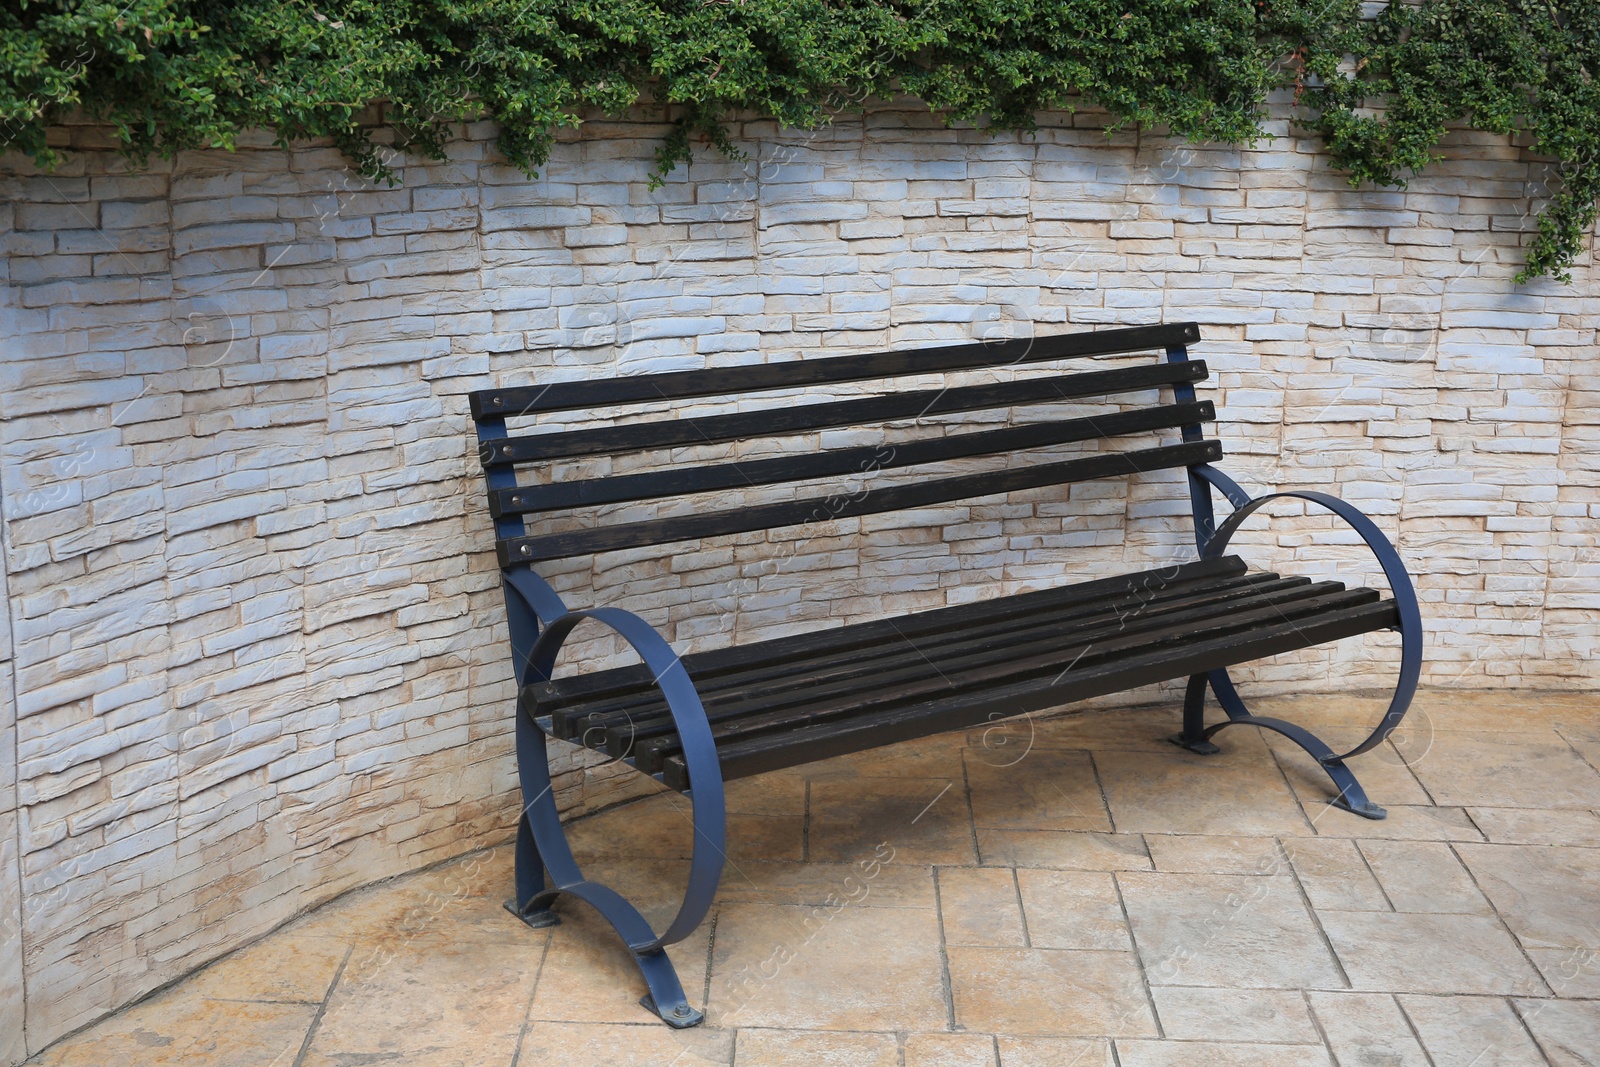 Photo of Beautiful wooden bench near brick wall on pavement outdoors